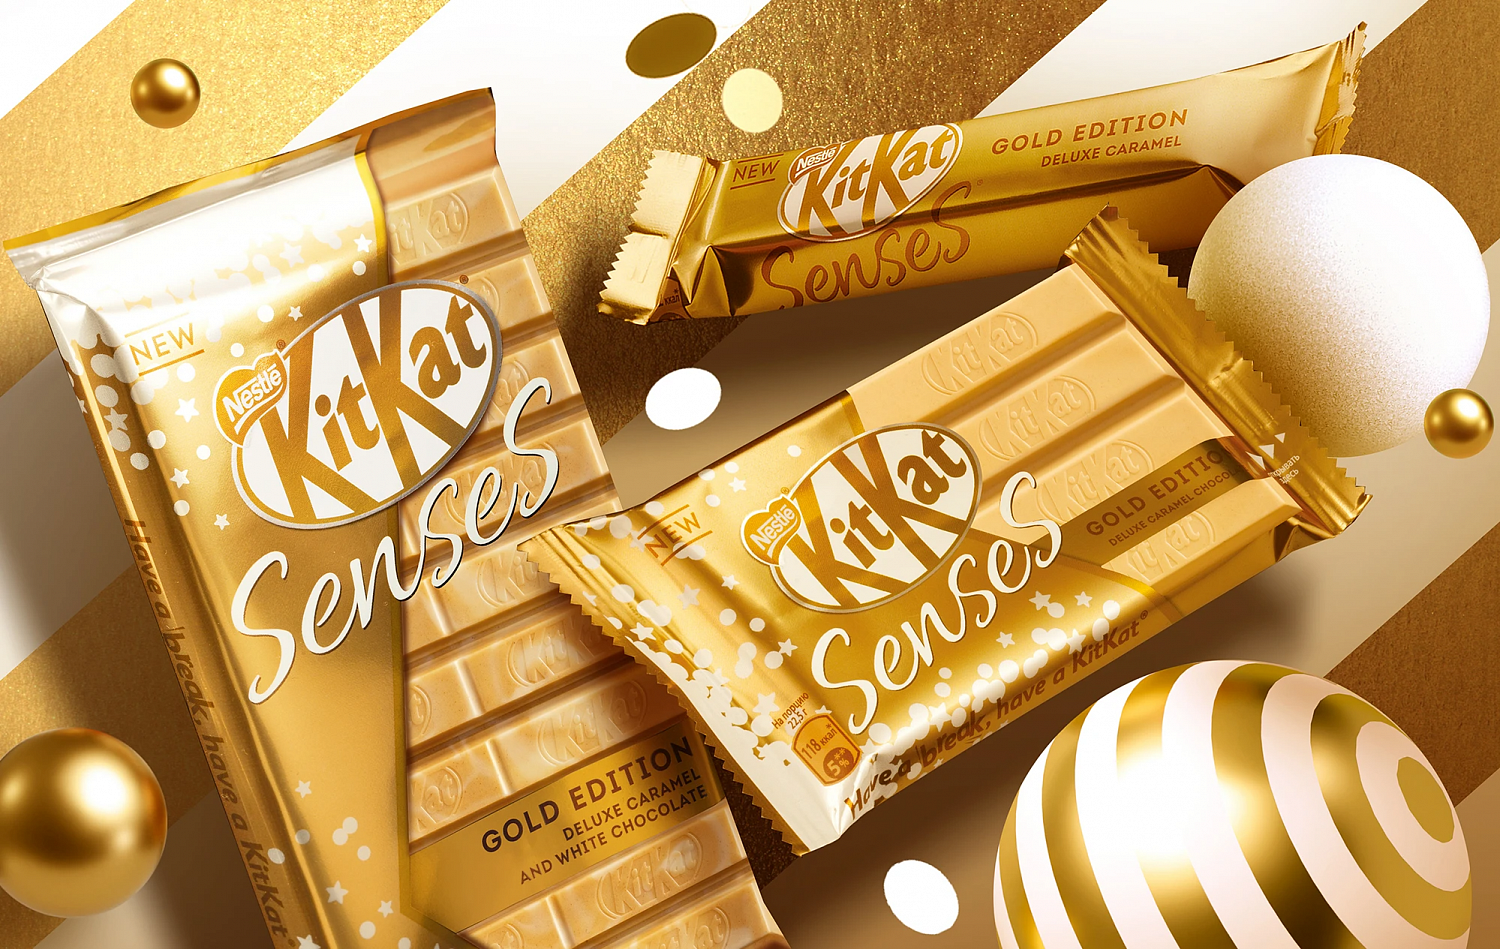 KitKat® Sense® Gold Edition - Портфолио Depot